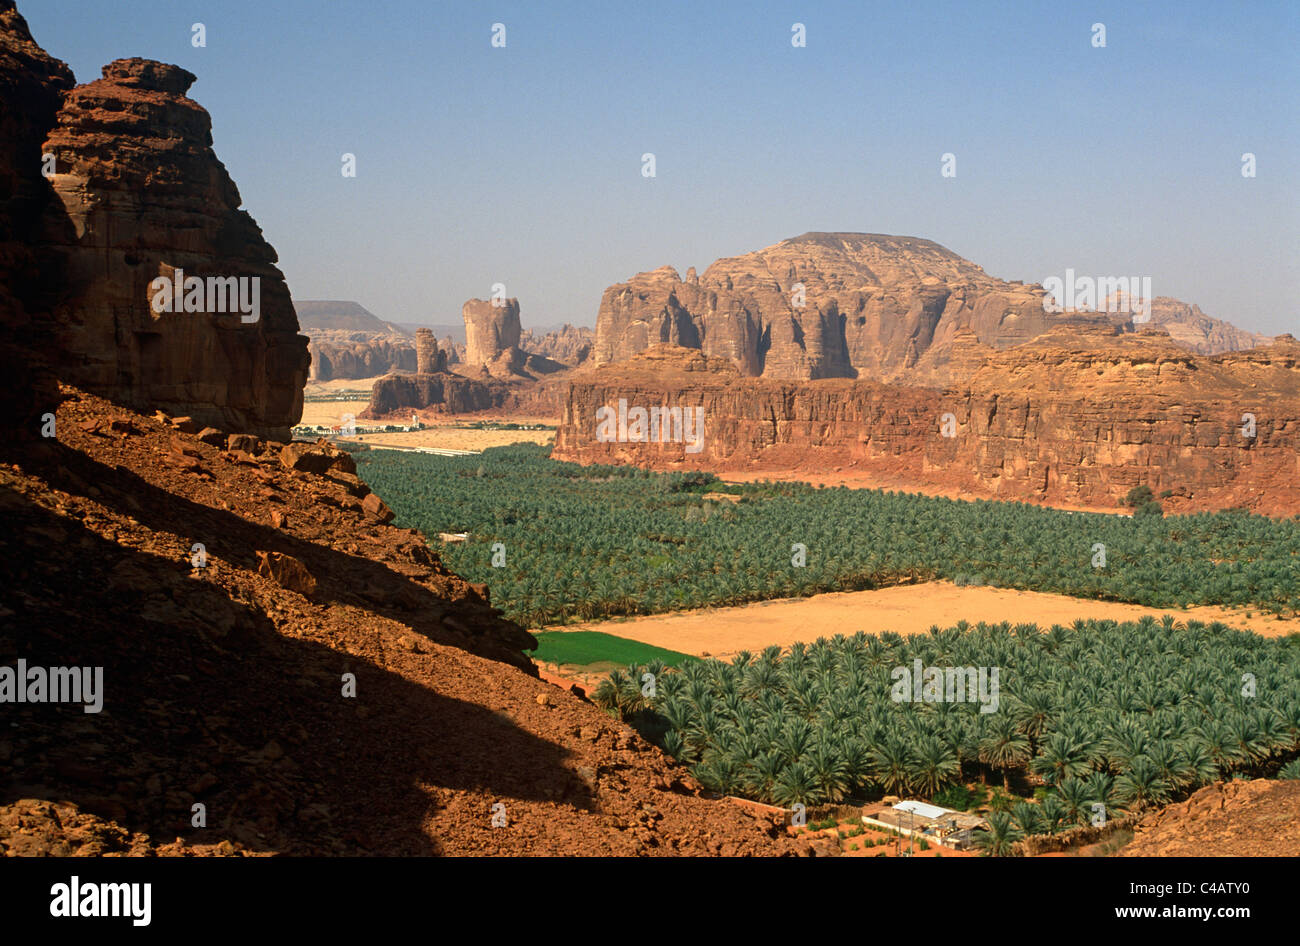 Saudi Arabia, Madinah, Al-Ula. Date plantations lie amidst picturesque scenery in the oasis surrounding Al-Ula. Stock Photo